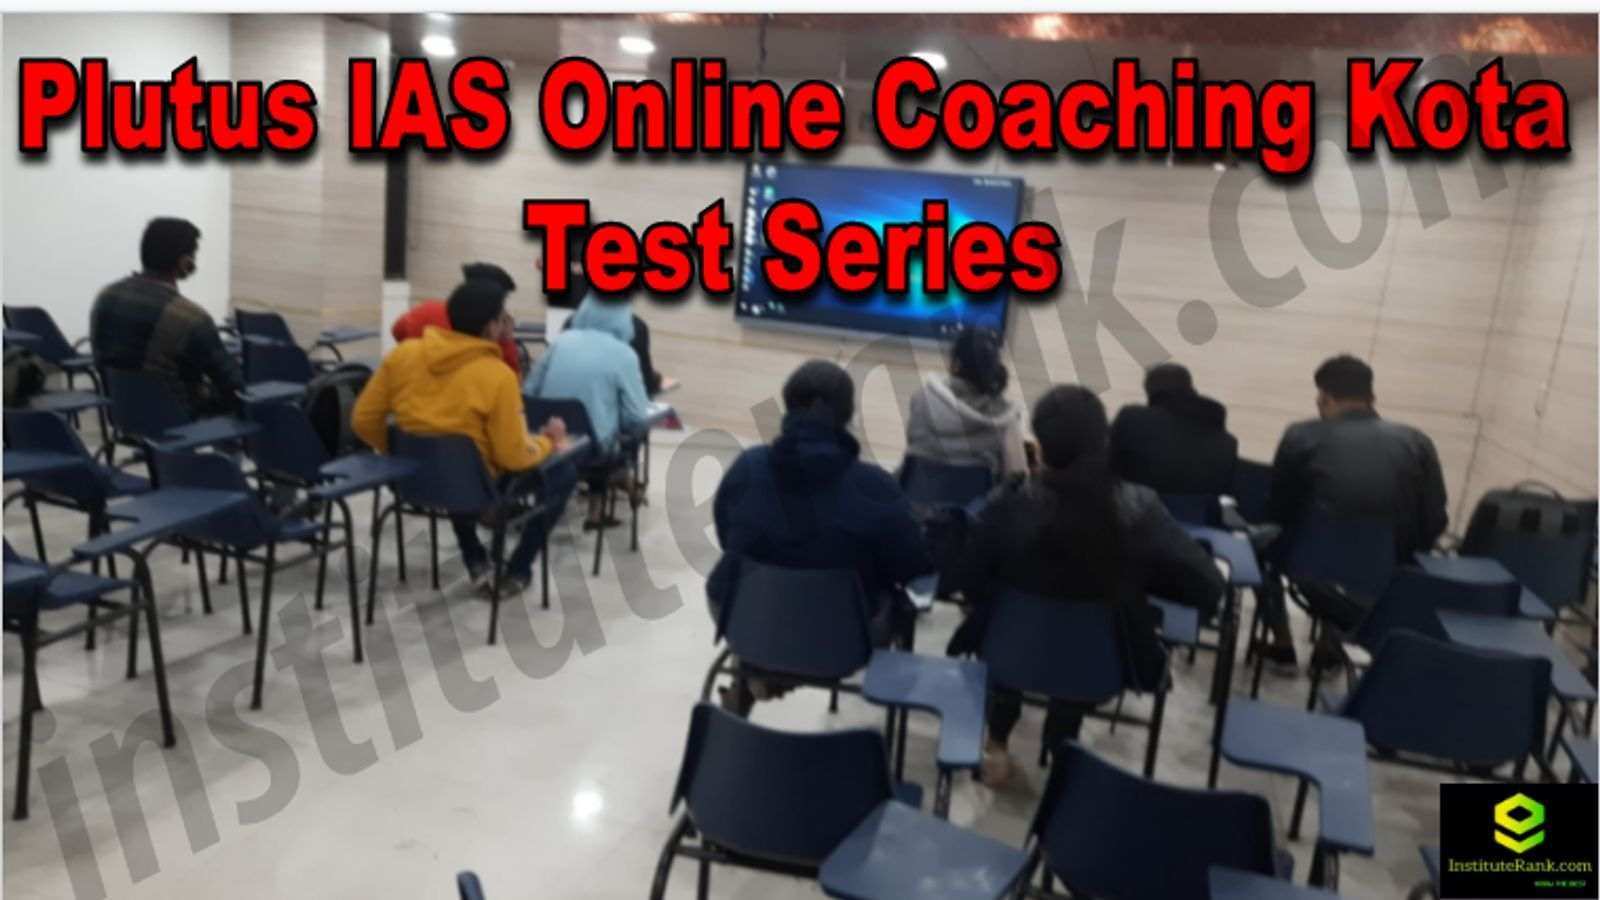 Plutus IAS Online Coaching Kota Reviews Test Series